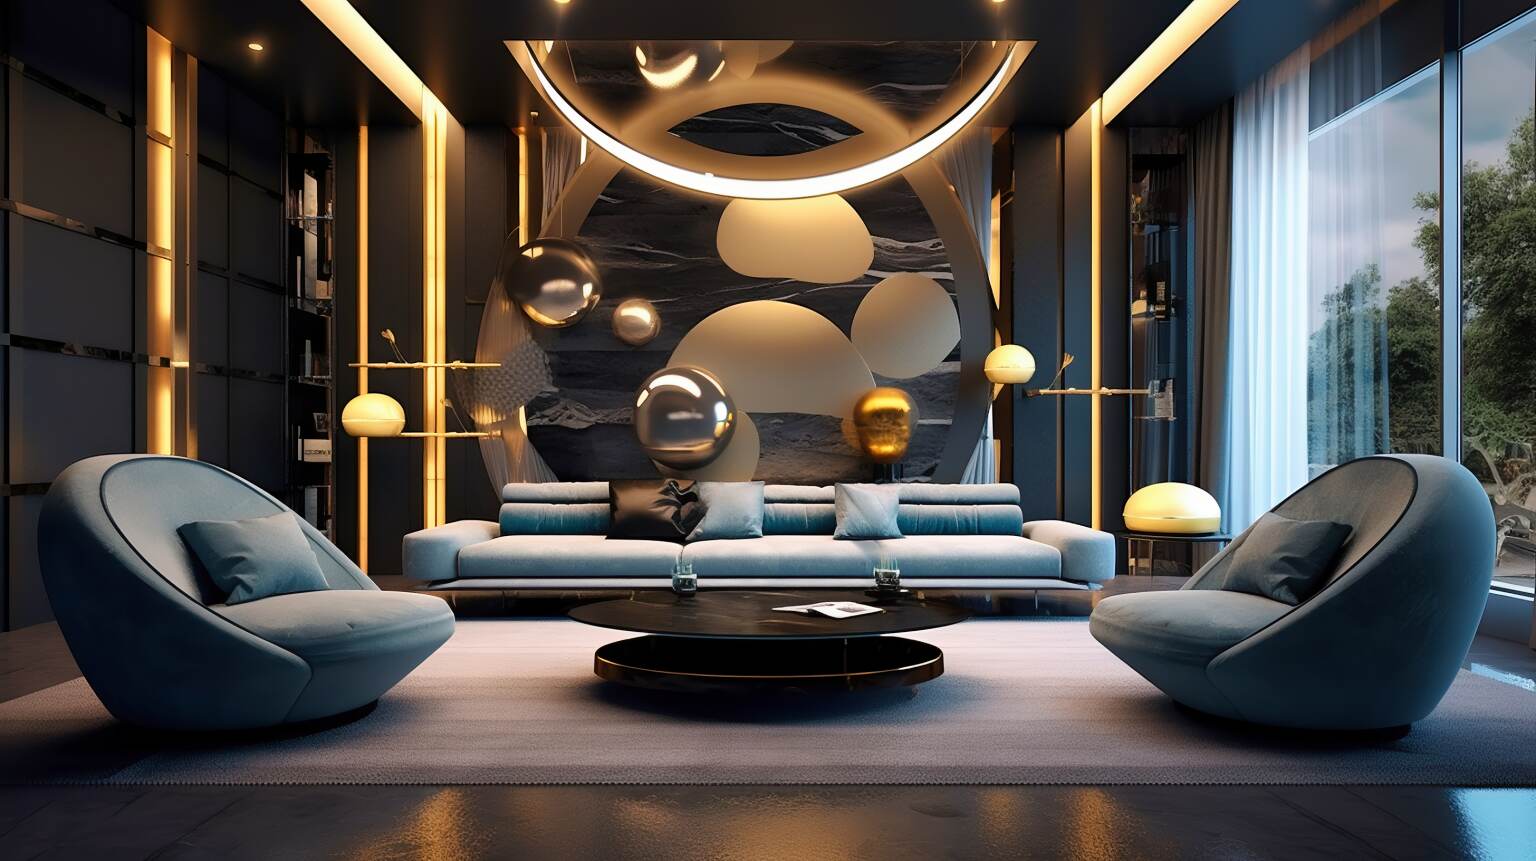 Image Of A Sleek Futuristic Living Room